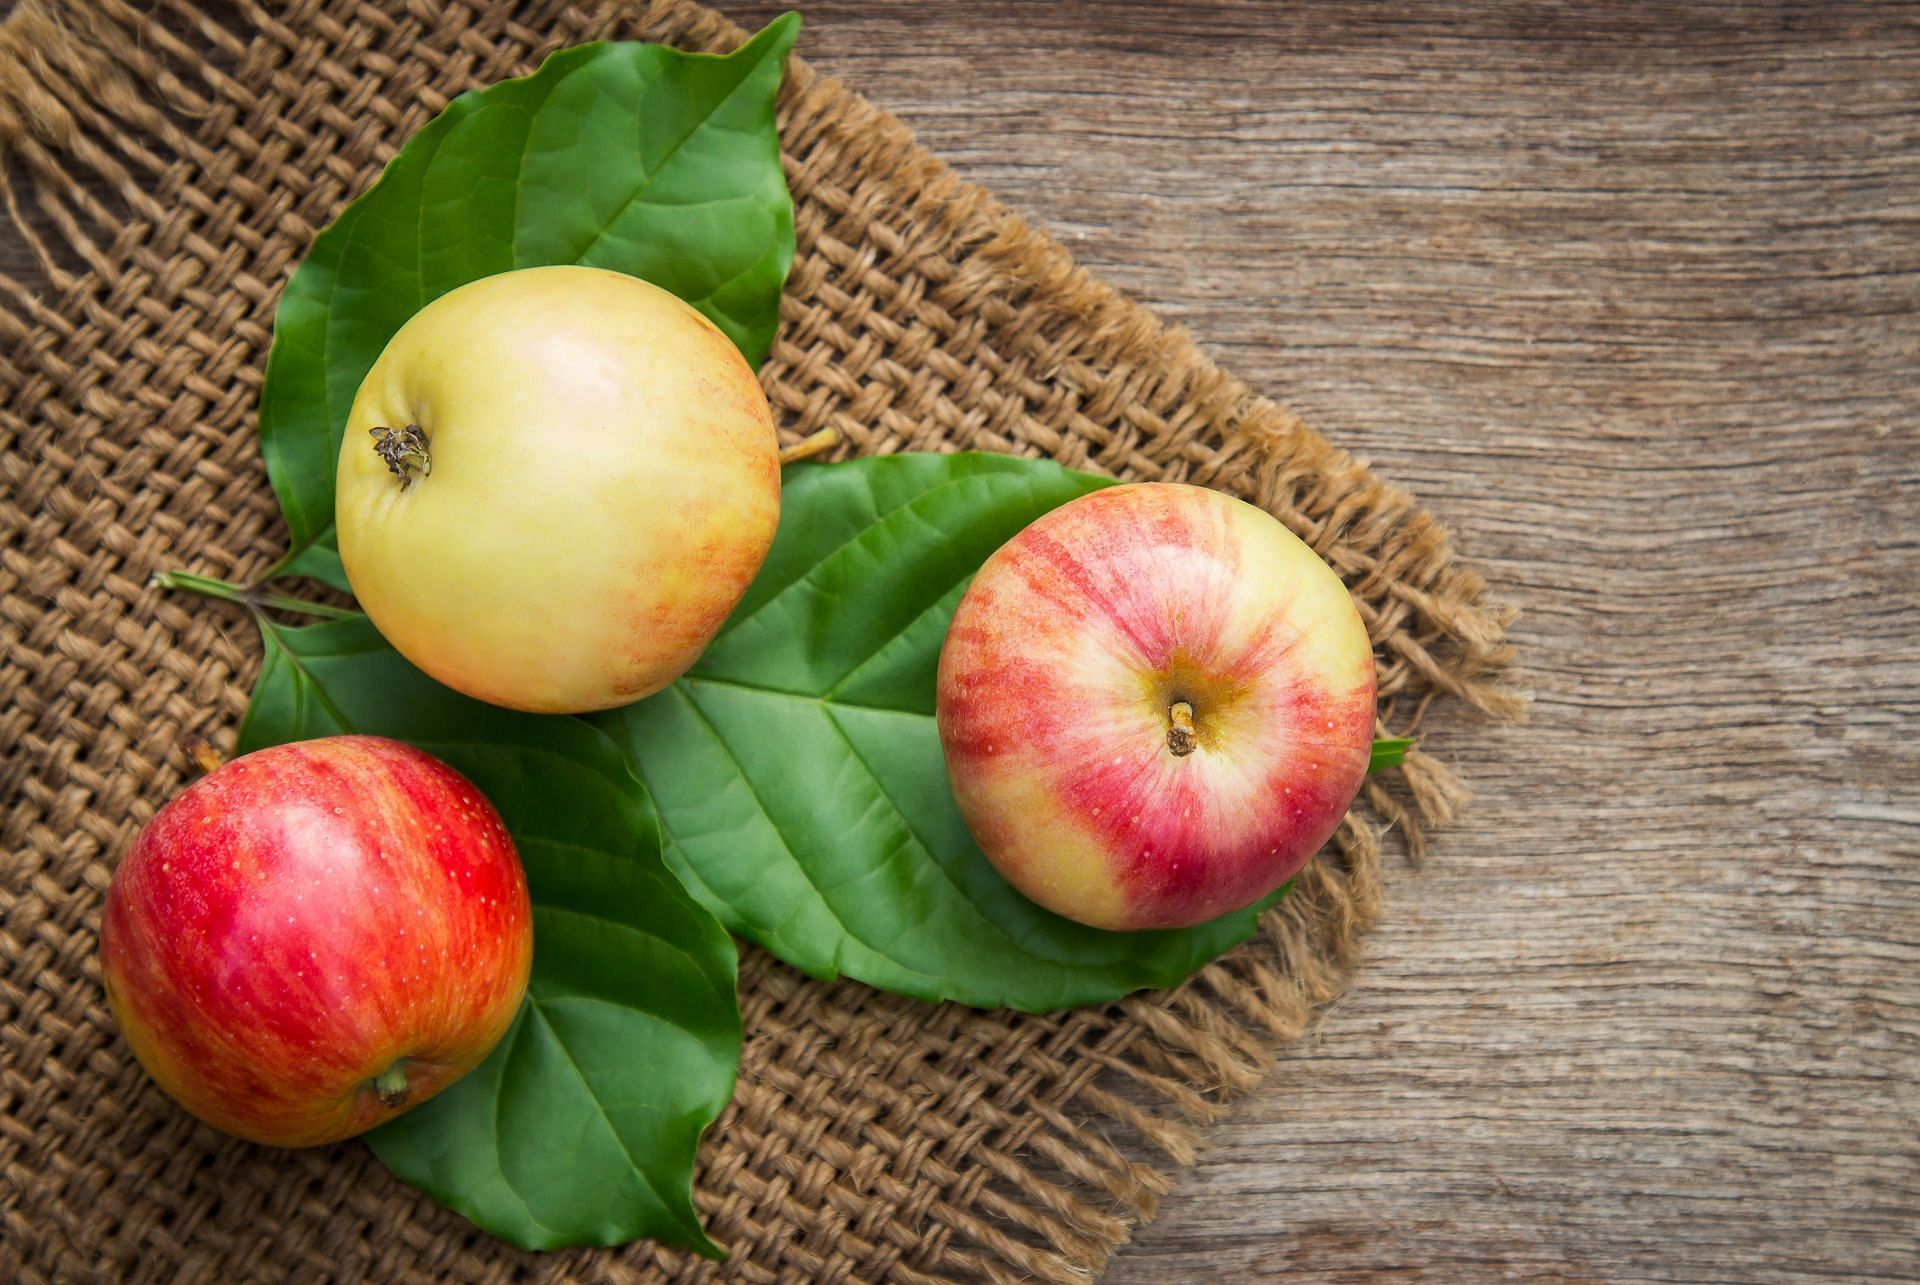 Apple cider vinegar benefits (image sourced via Pexels / Photo by Aphiwat)